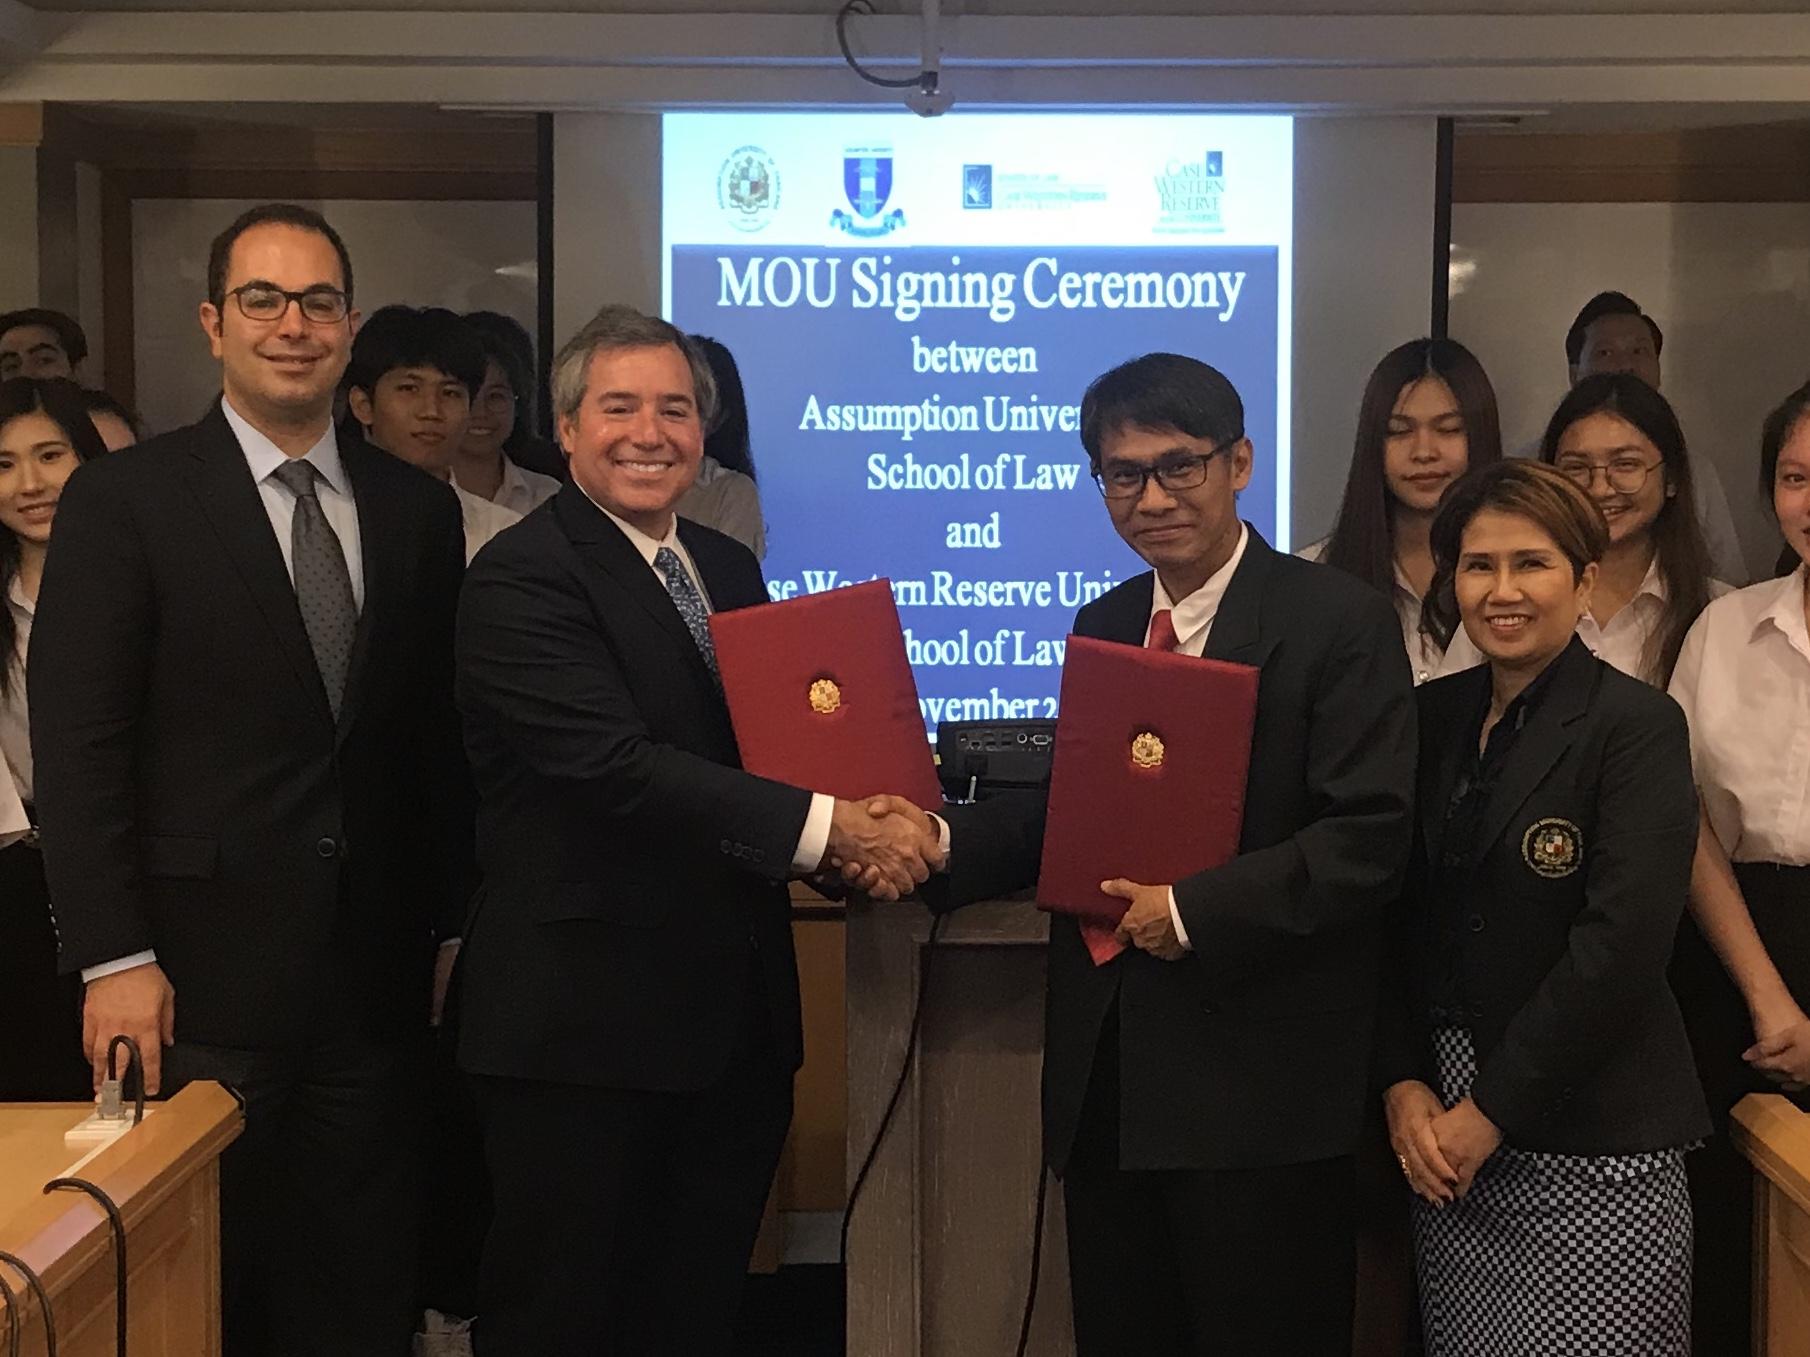 Dean Scharf and Assumption Dean Stephen Naluang signing the partnership agreement